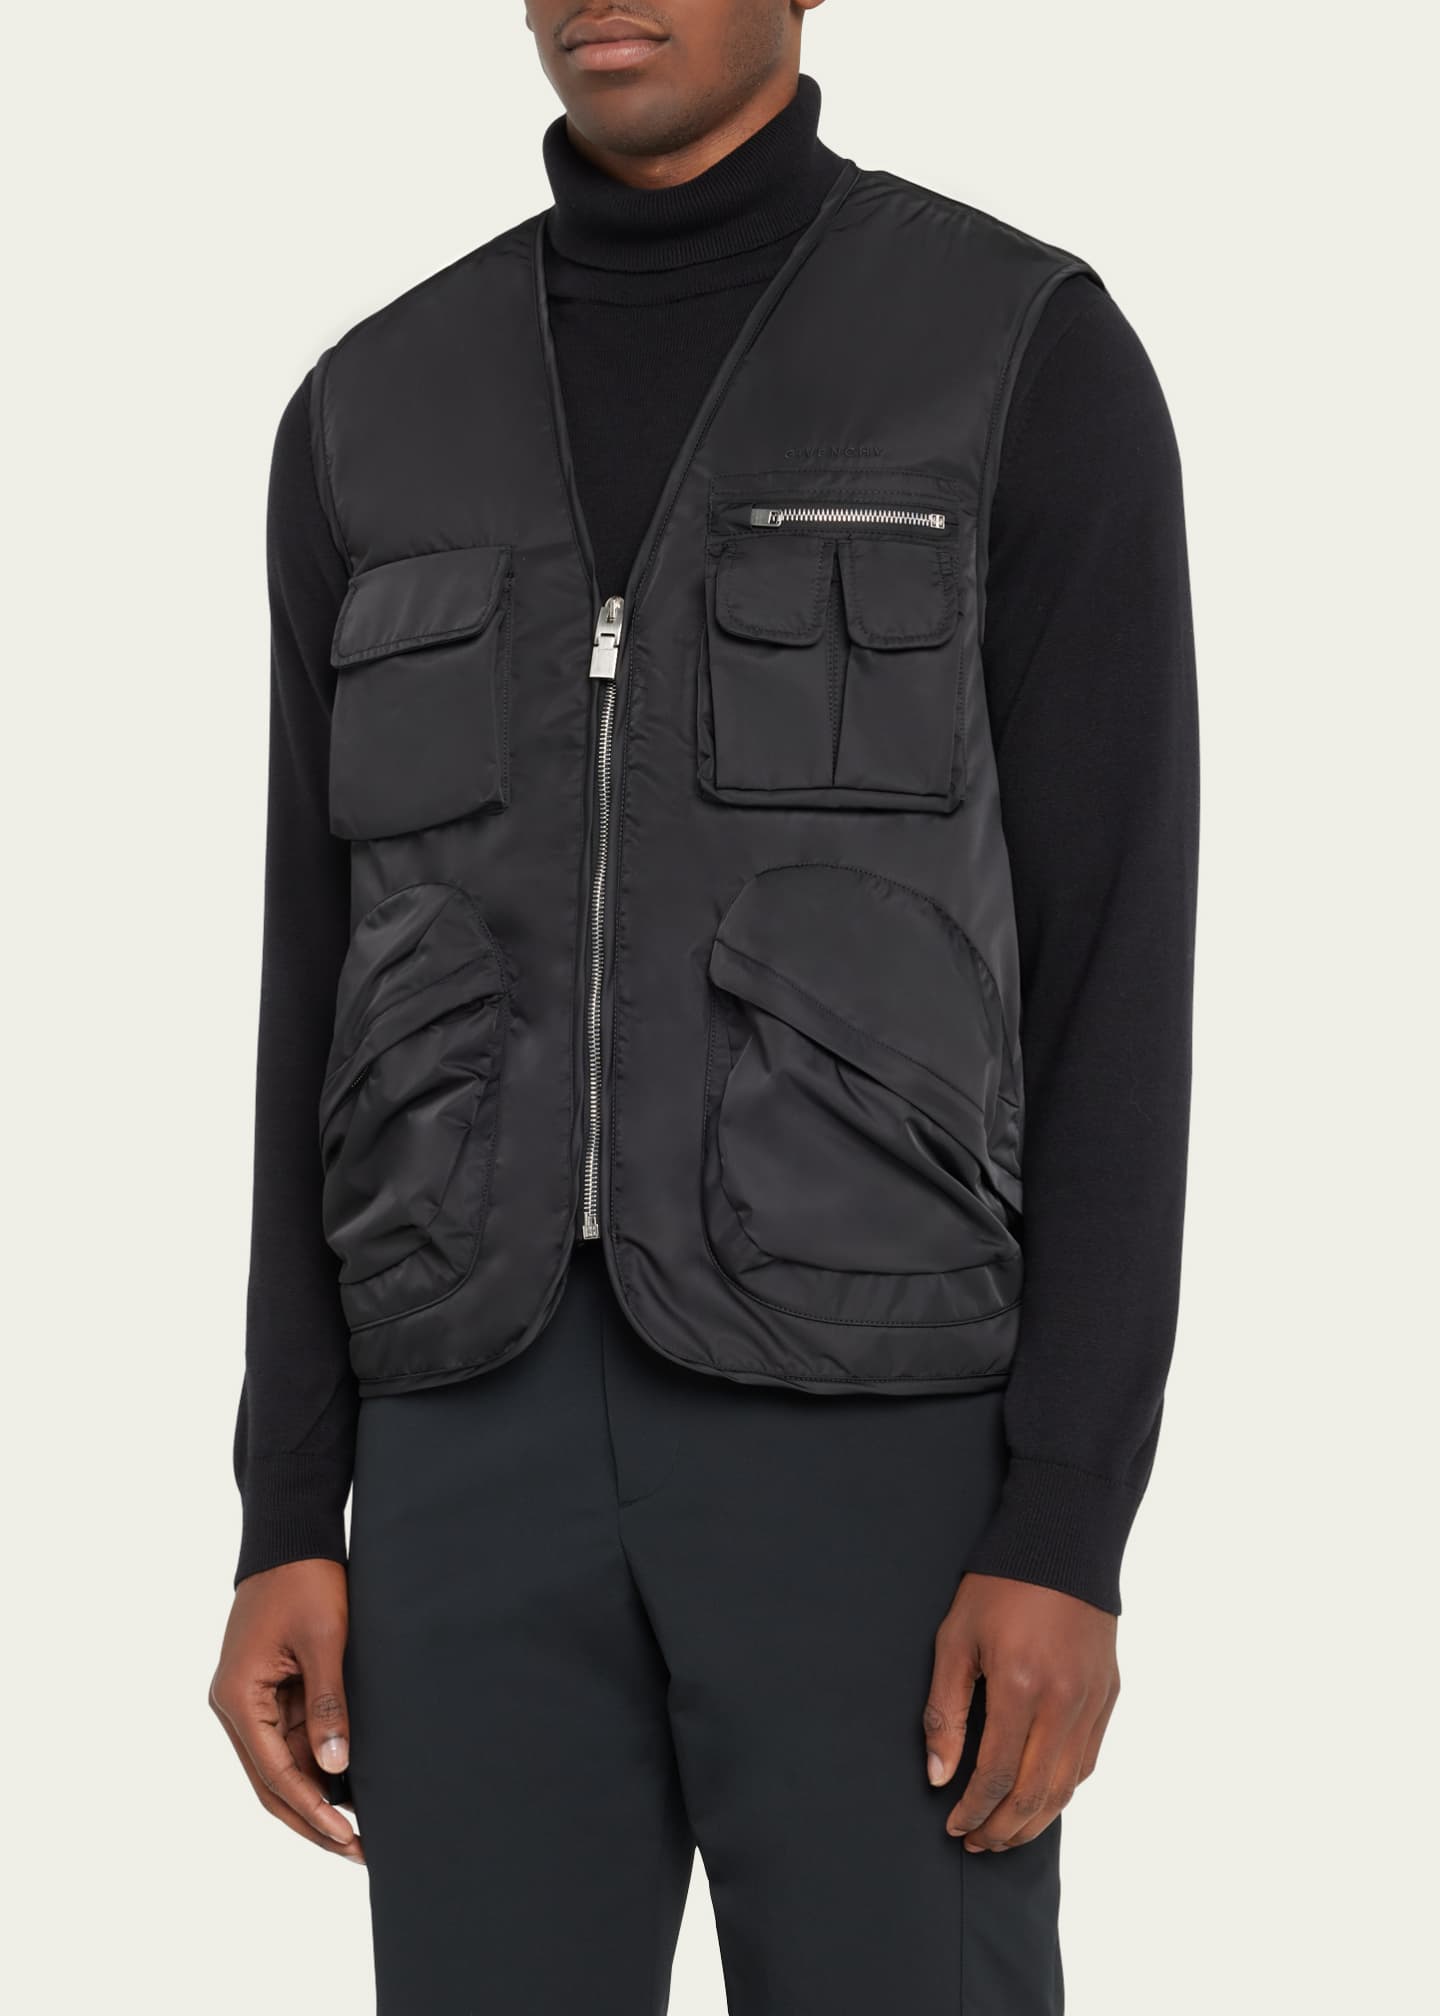 Givenchy Men's Multi-Pocket Zip Vest - Bergdorf Goodman